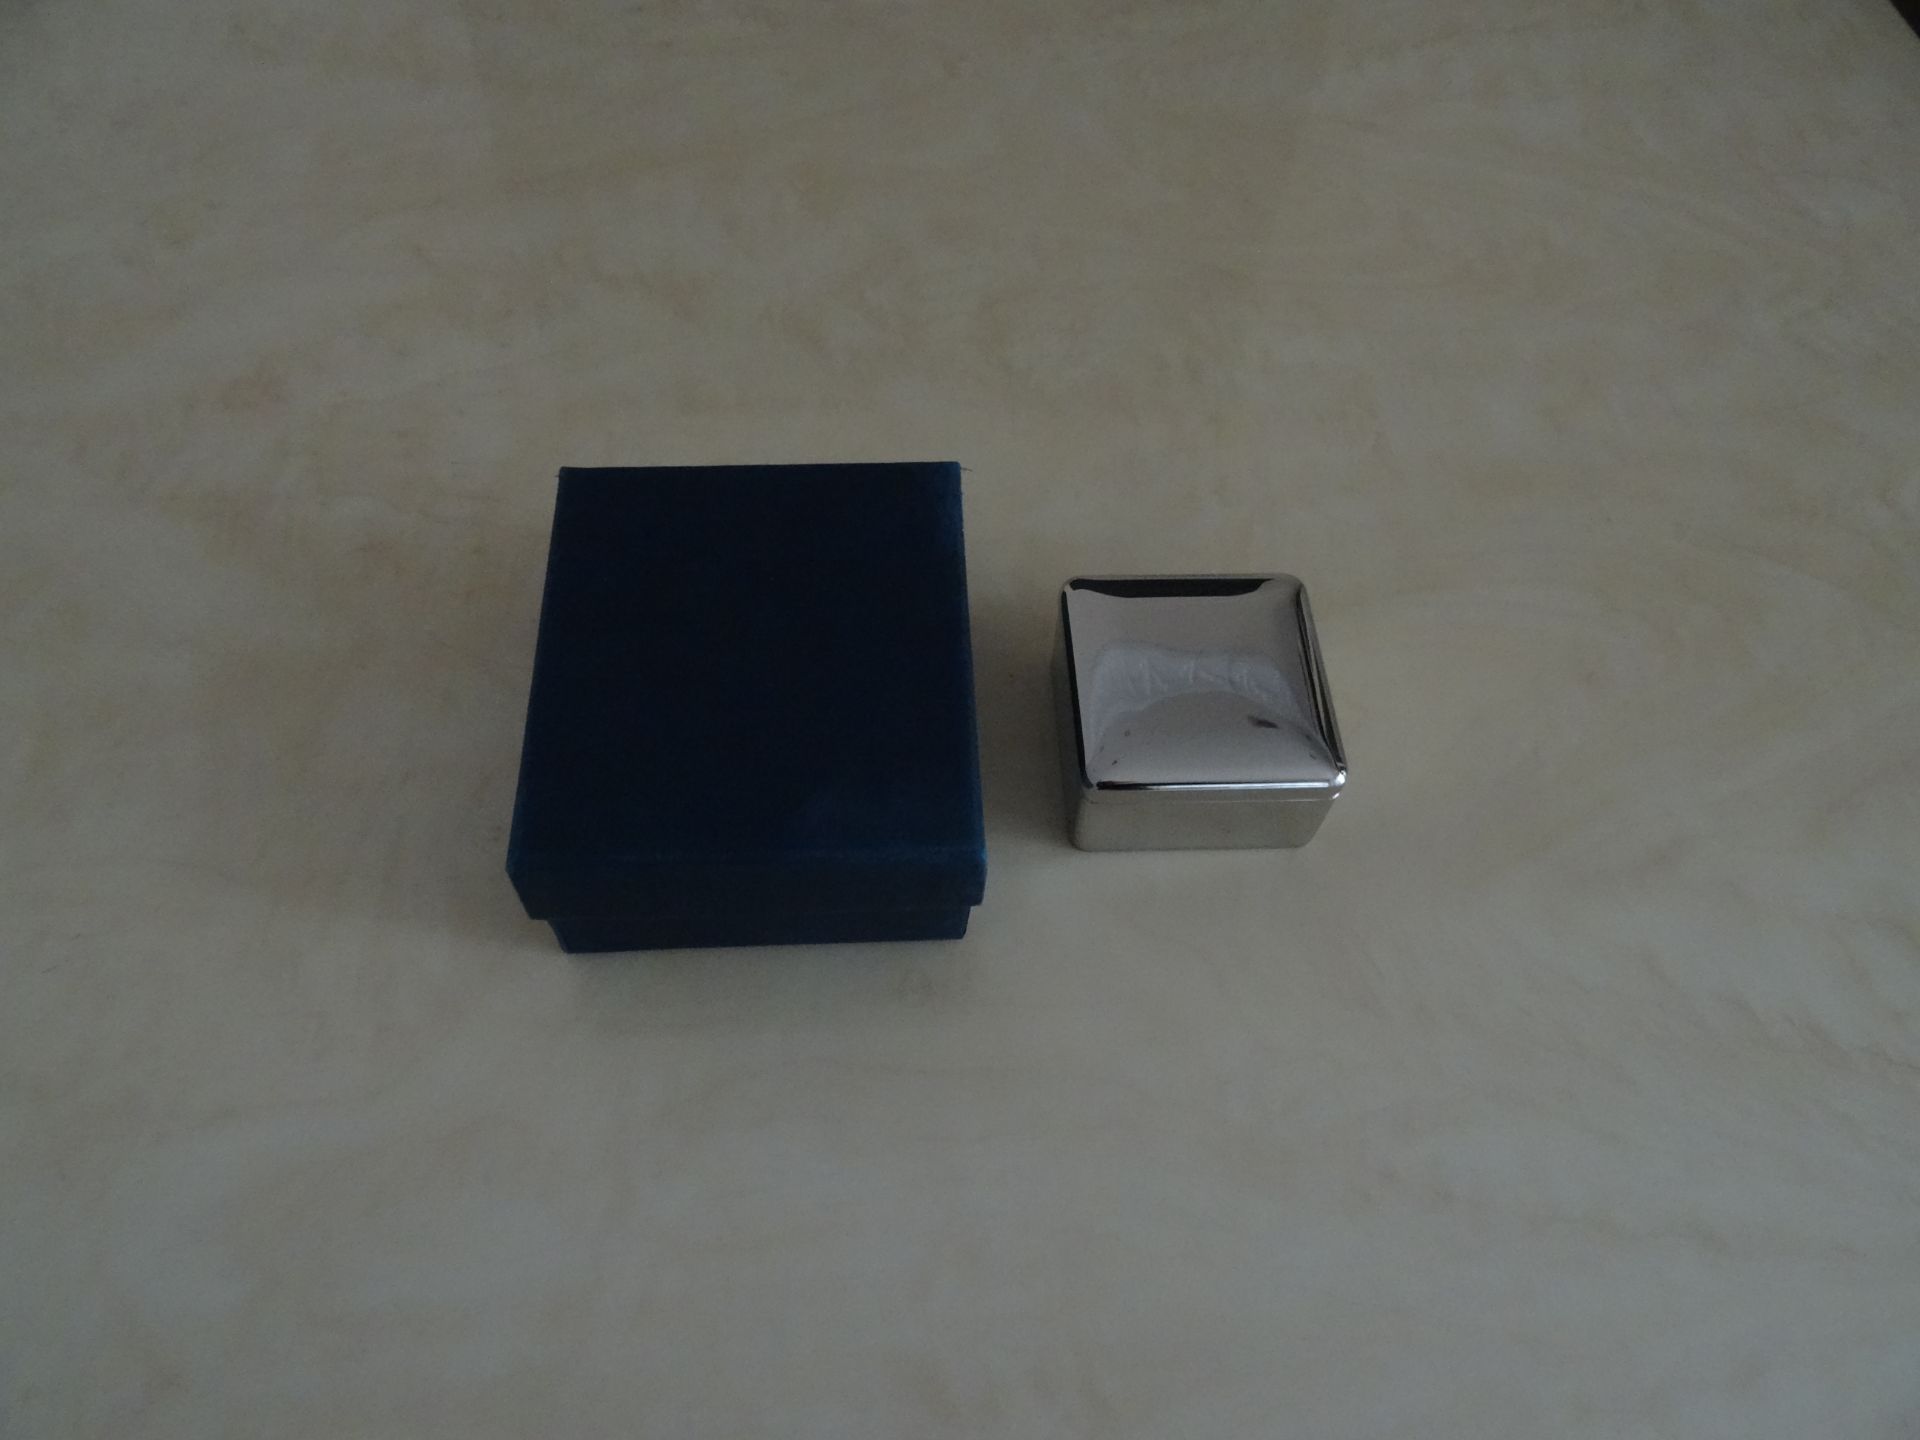 Silver Plated Square Jewellery Box x 1 Unit